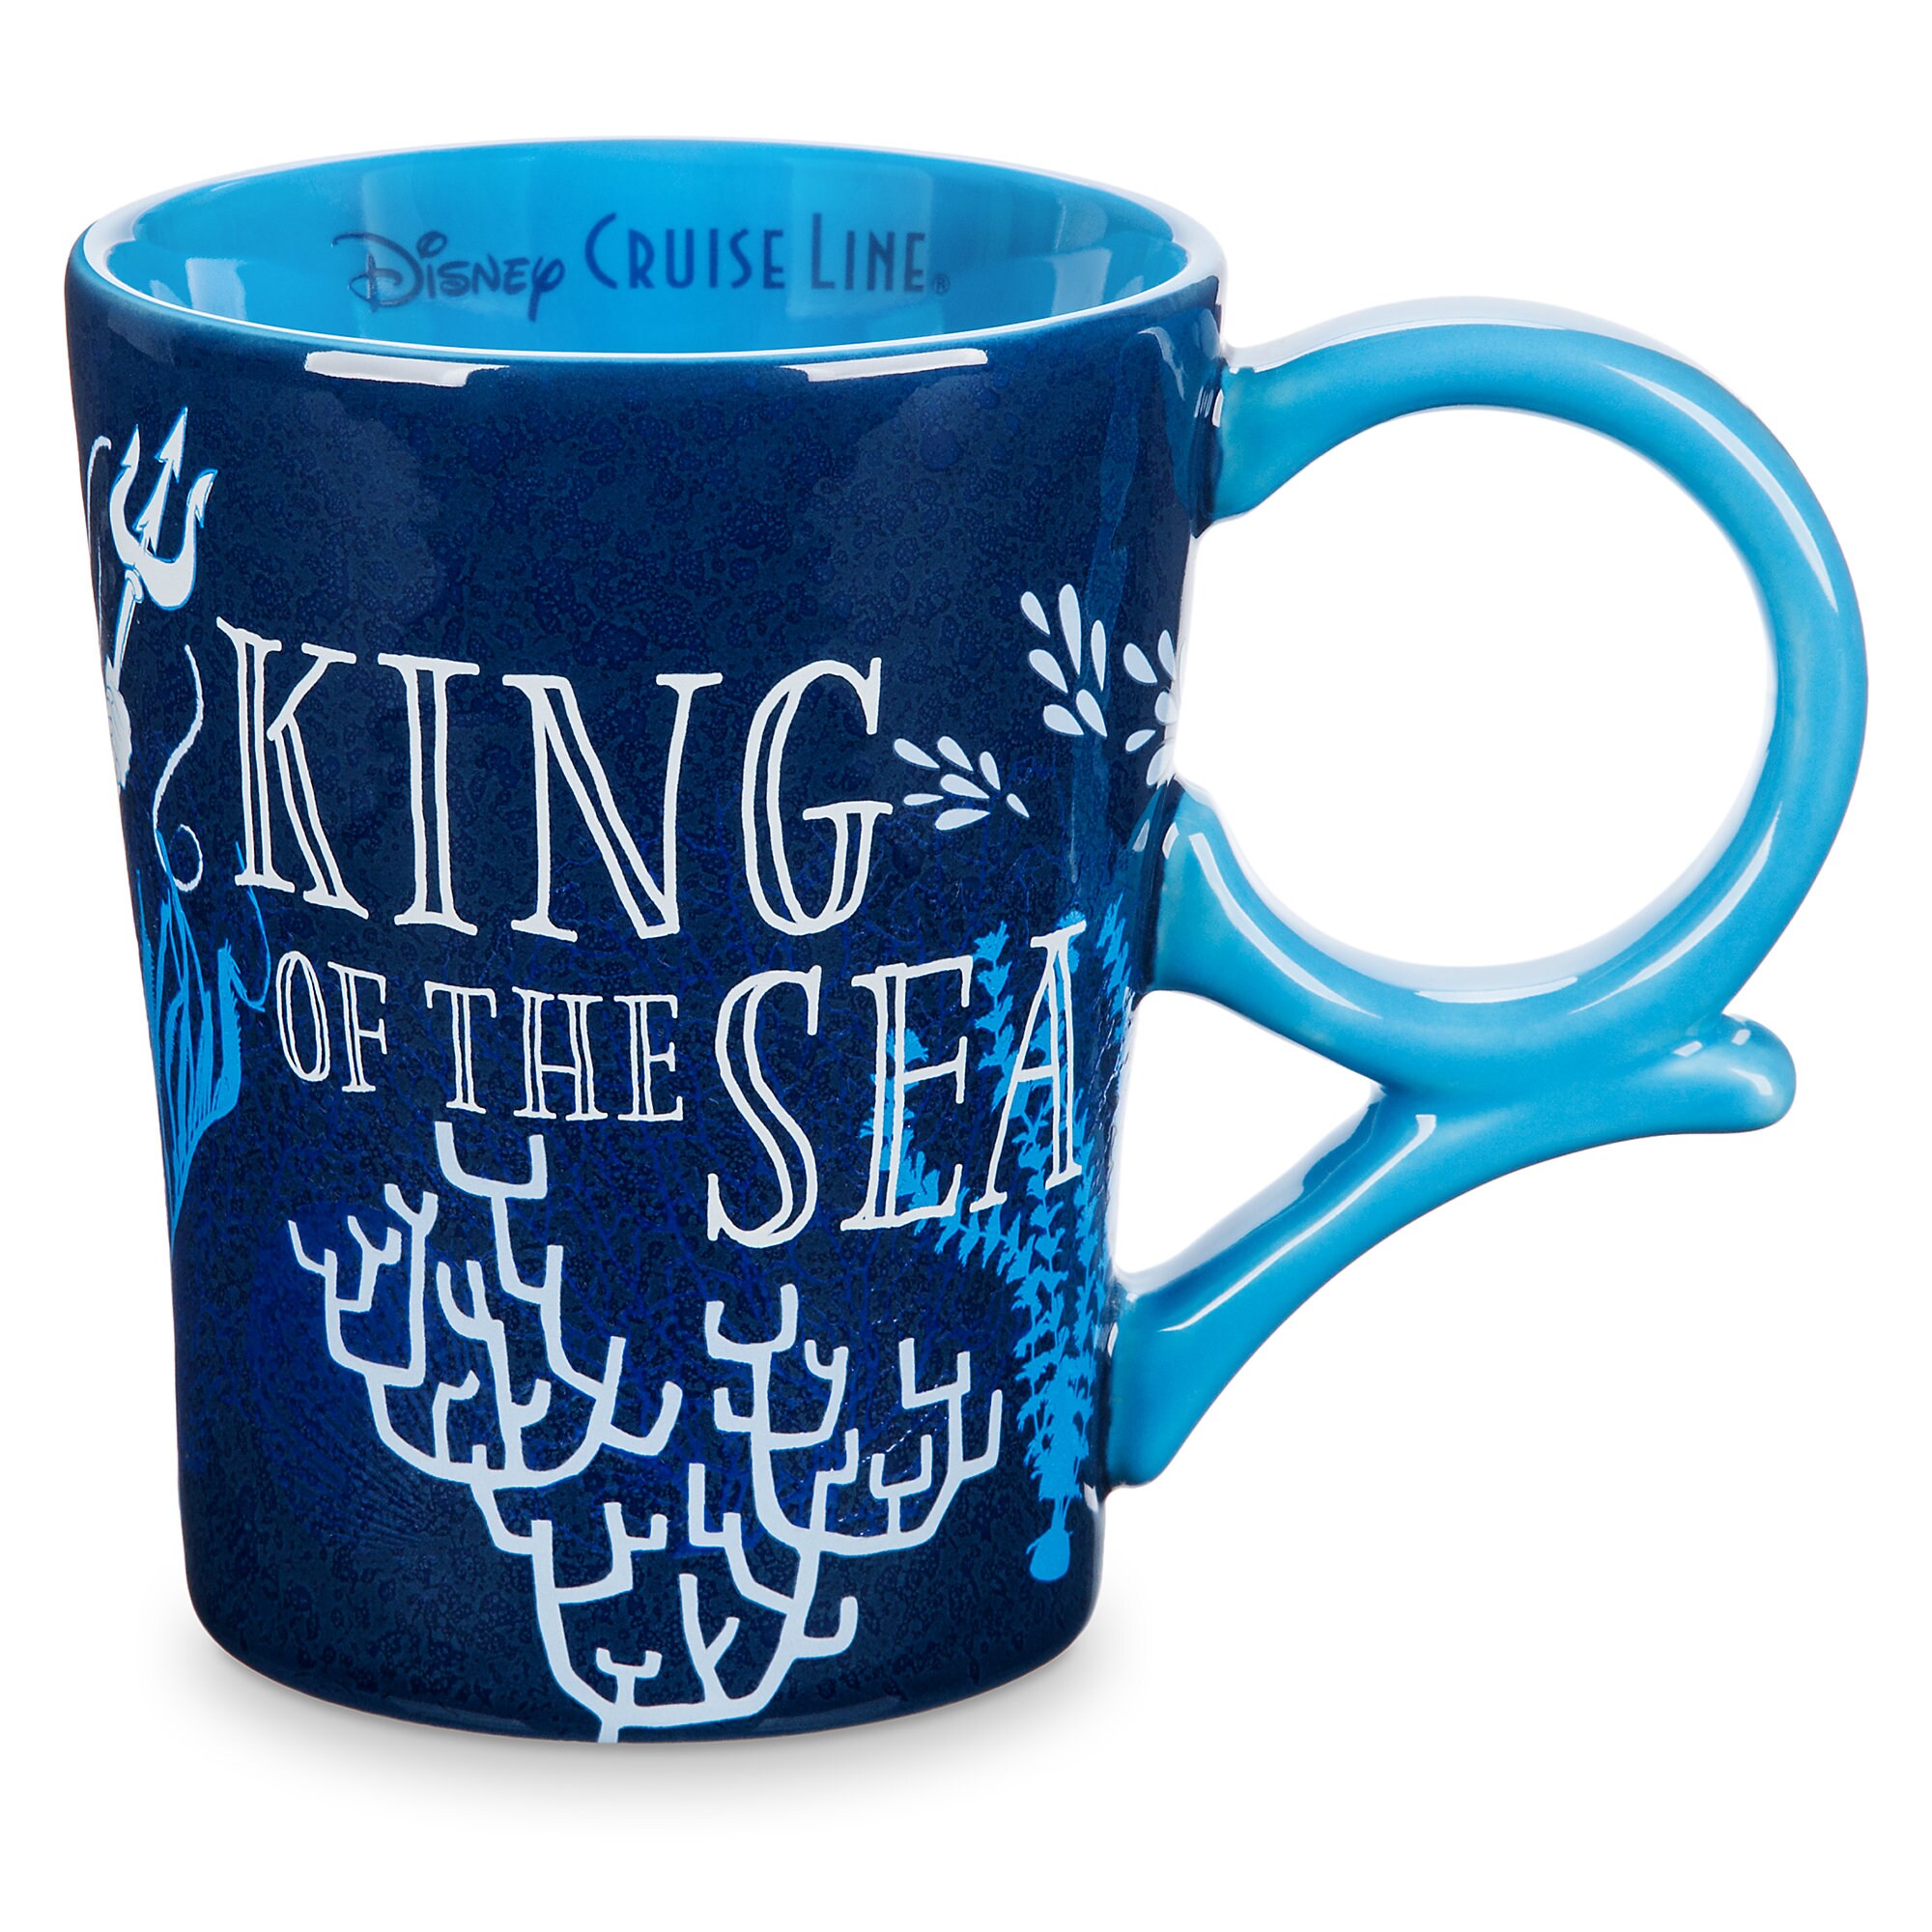 King Triton Mug - The Little Mermaid - Disney Cruise Line